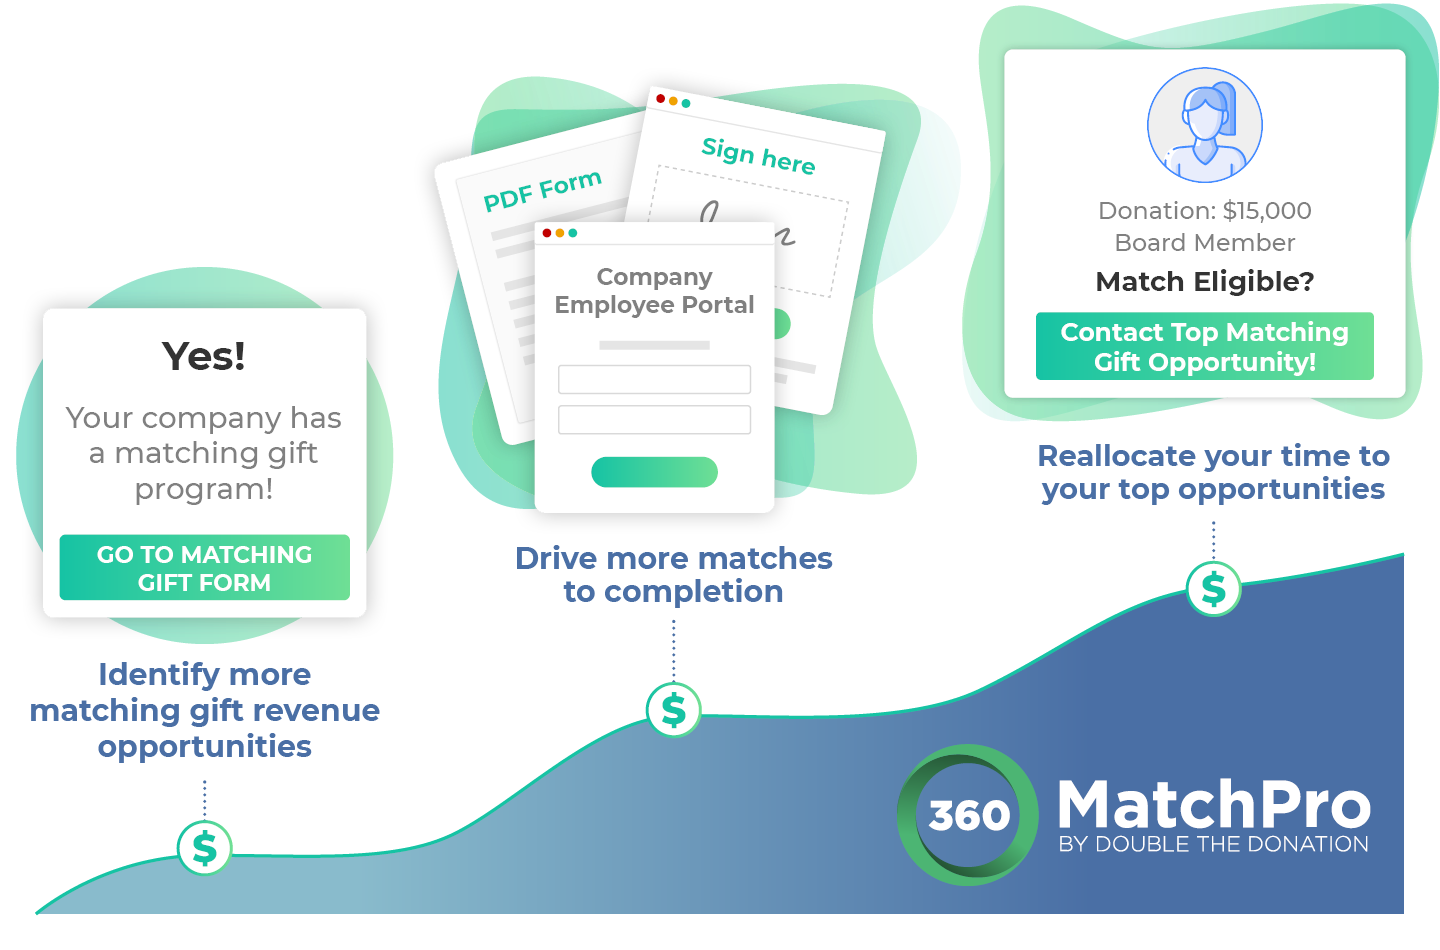 Explore matching gift marketing with 360MatchPro